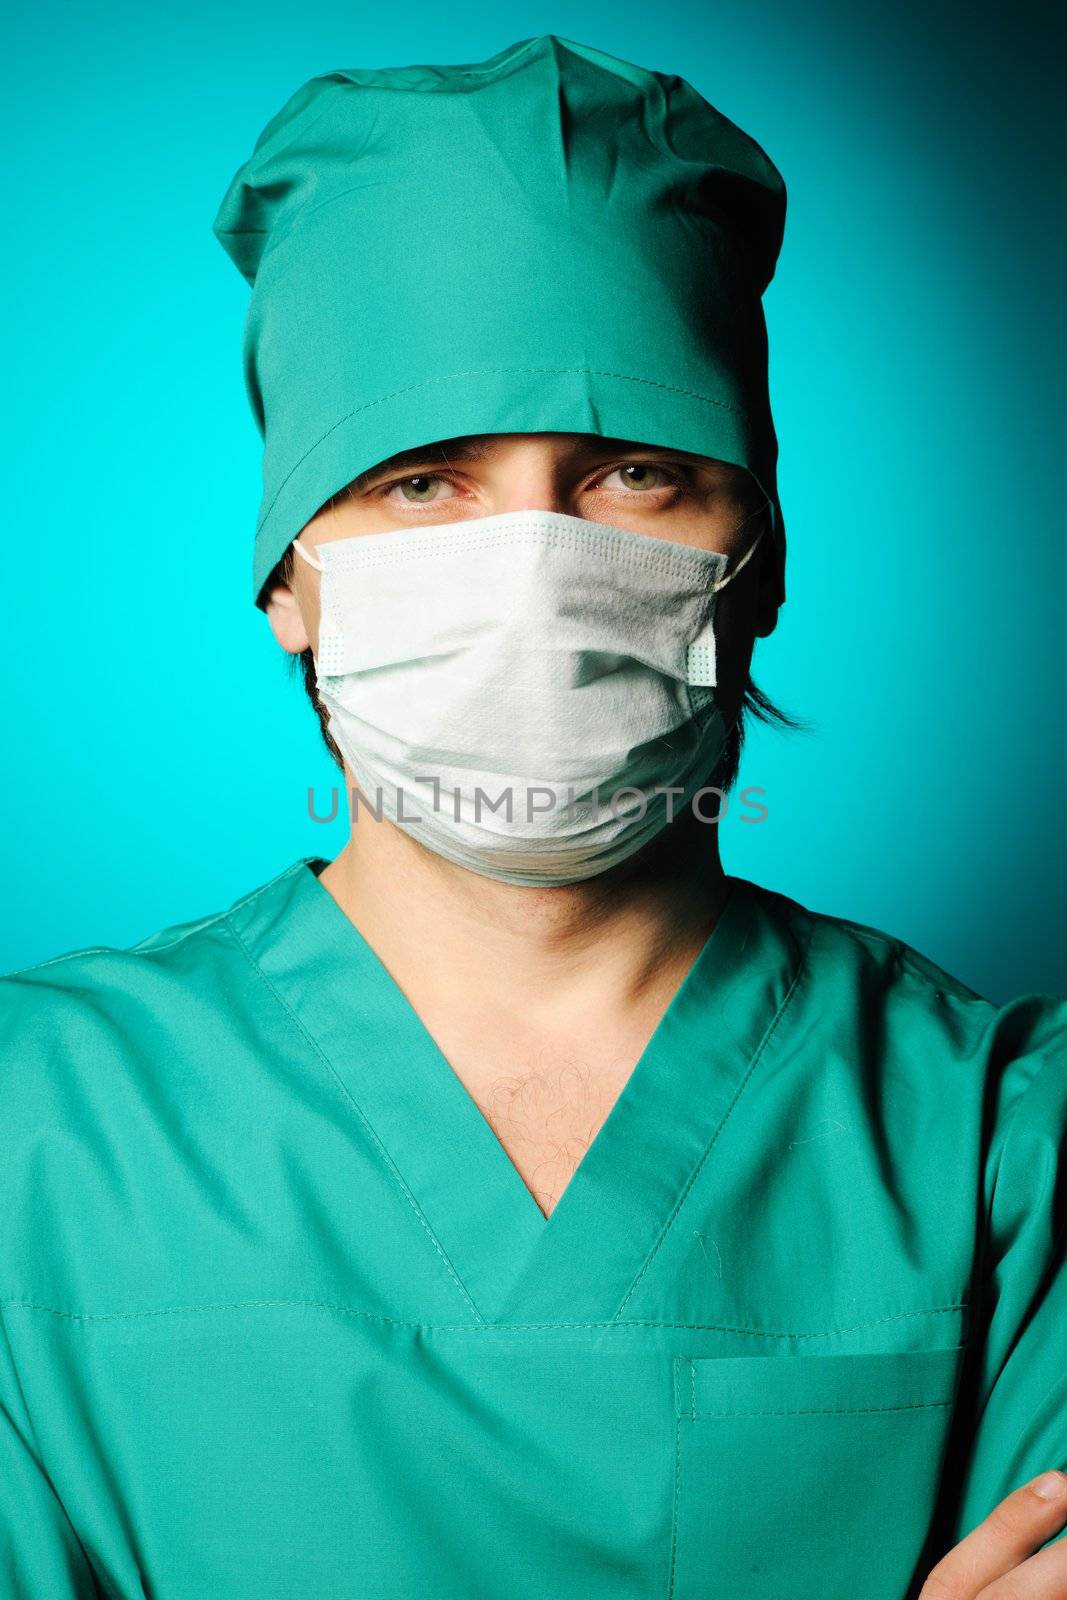 Surgeon in mask close-up portrait